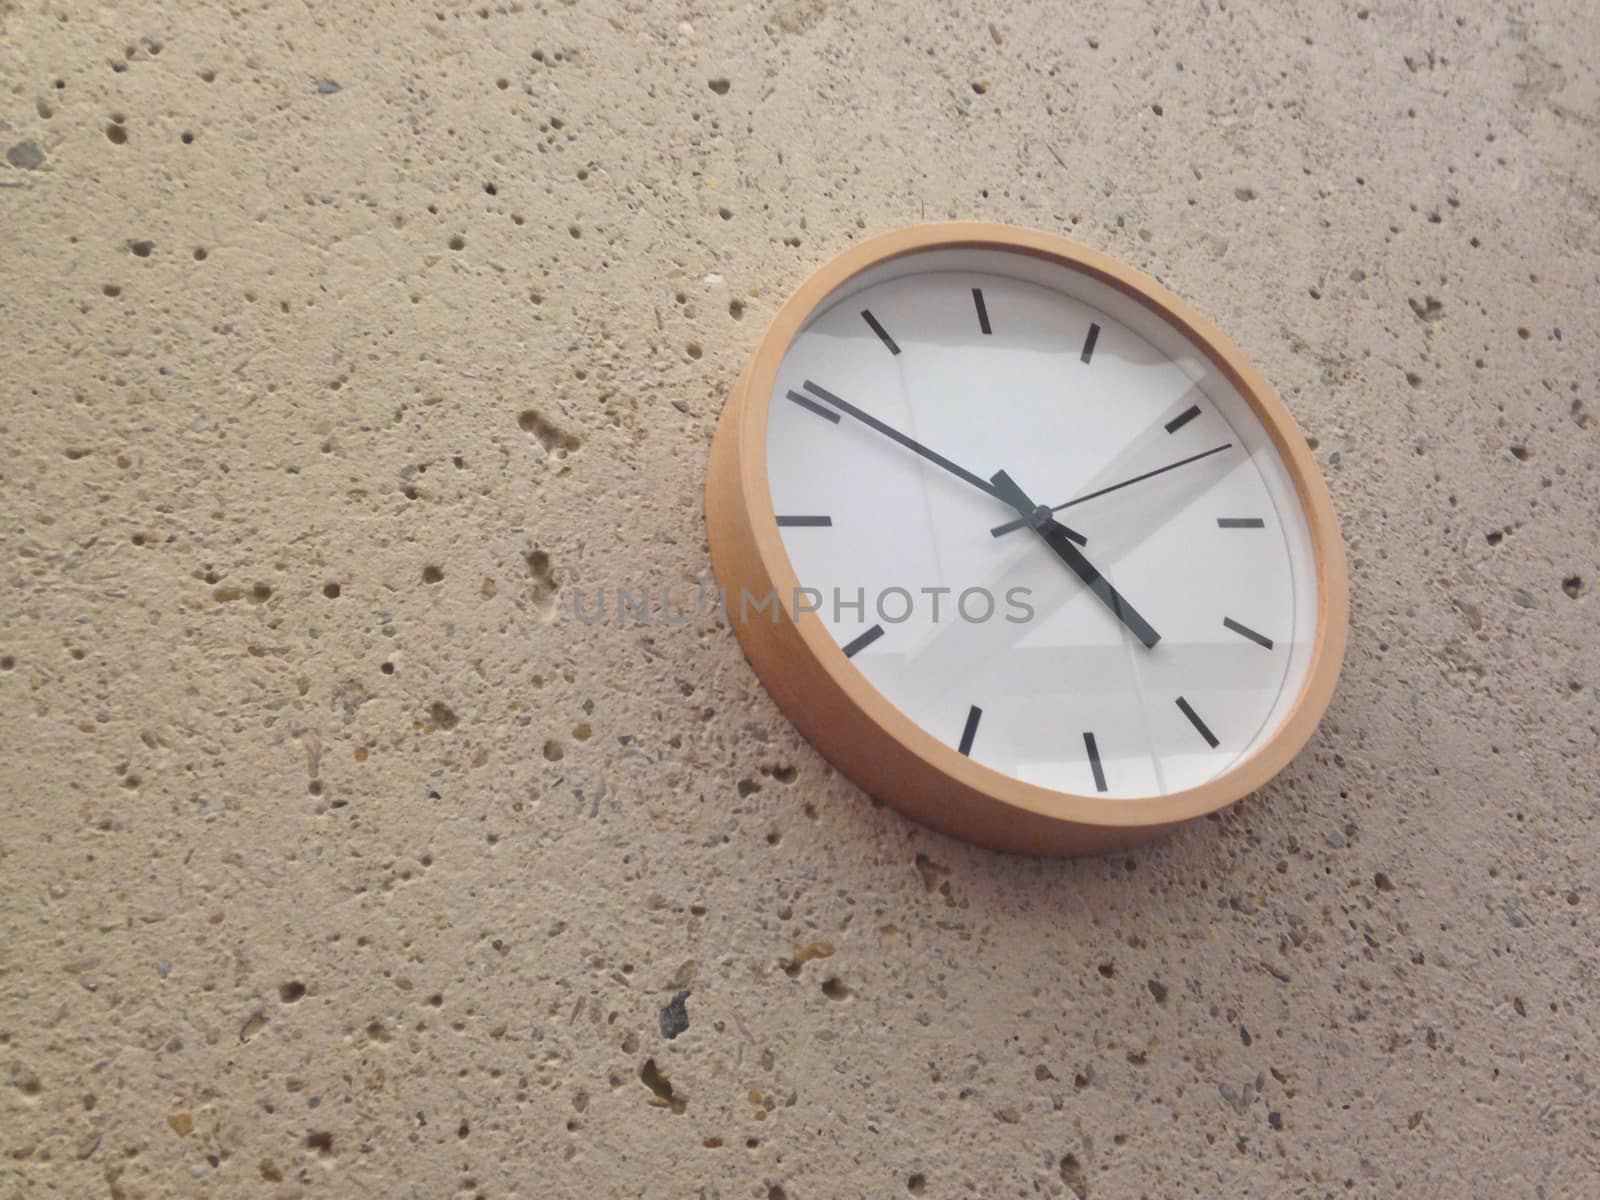 Simple classical analog wall clock by eyeofpaul